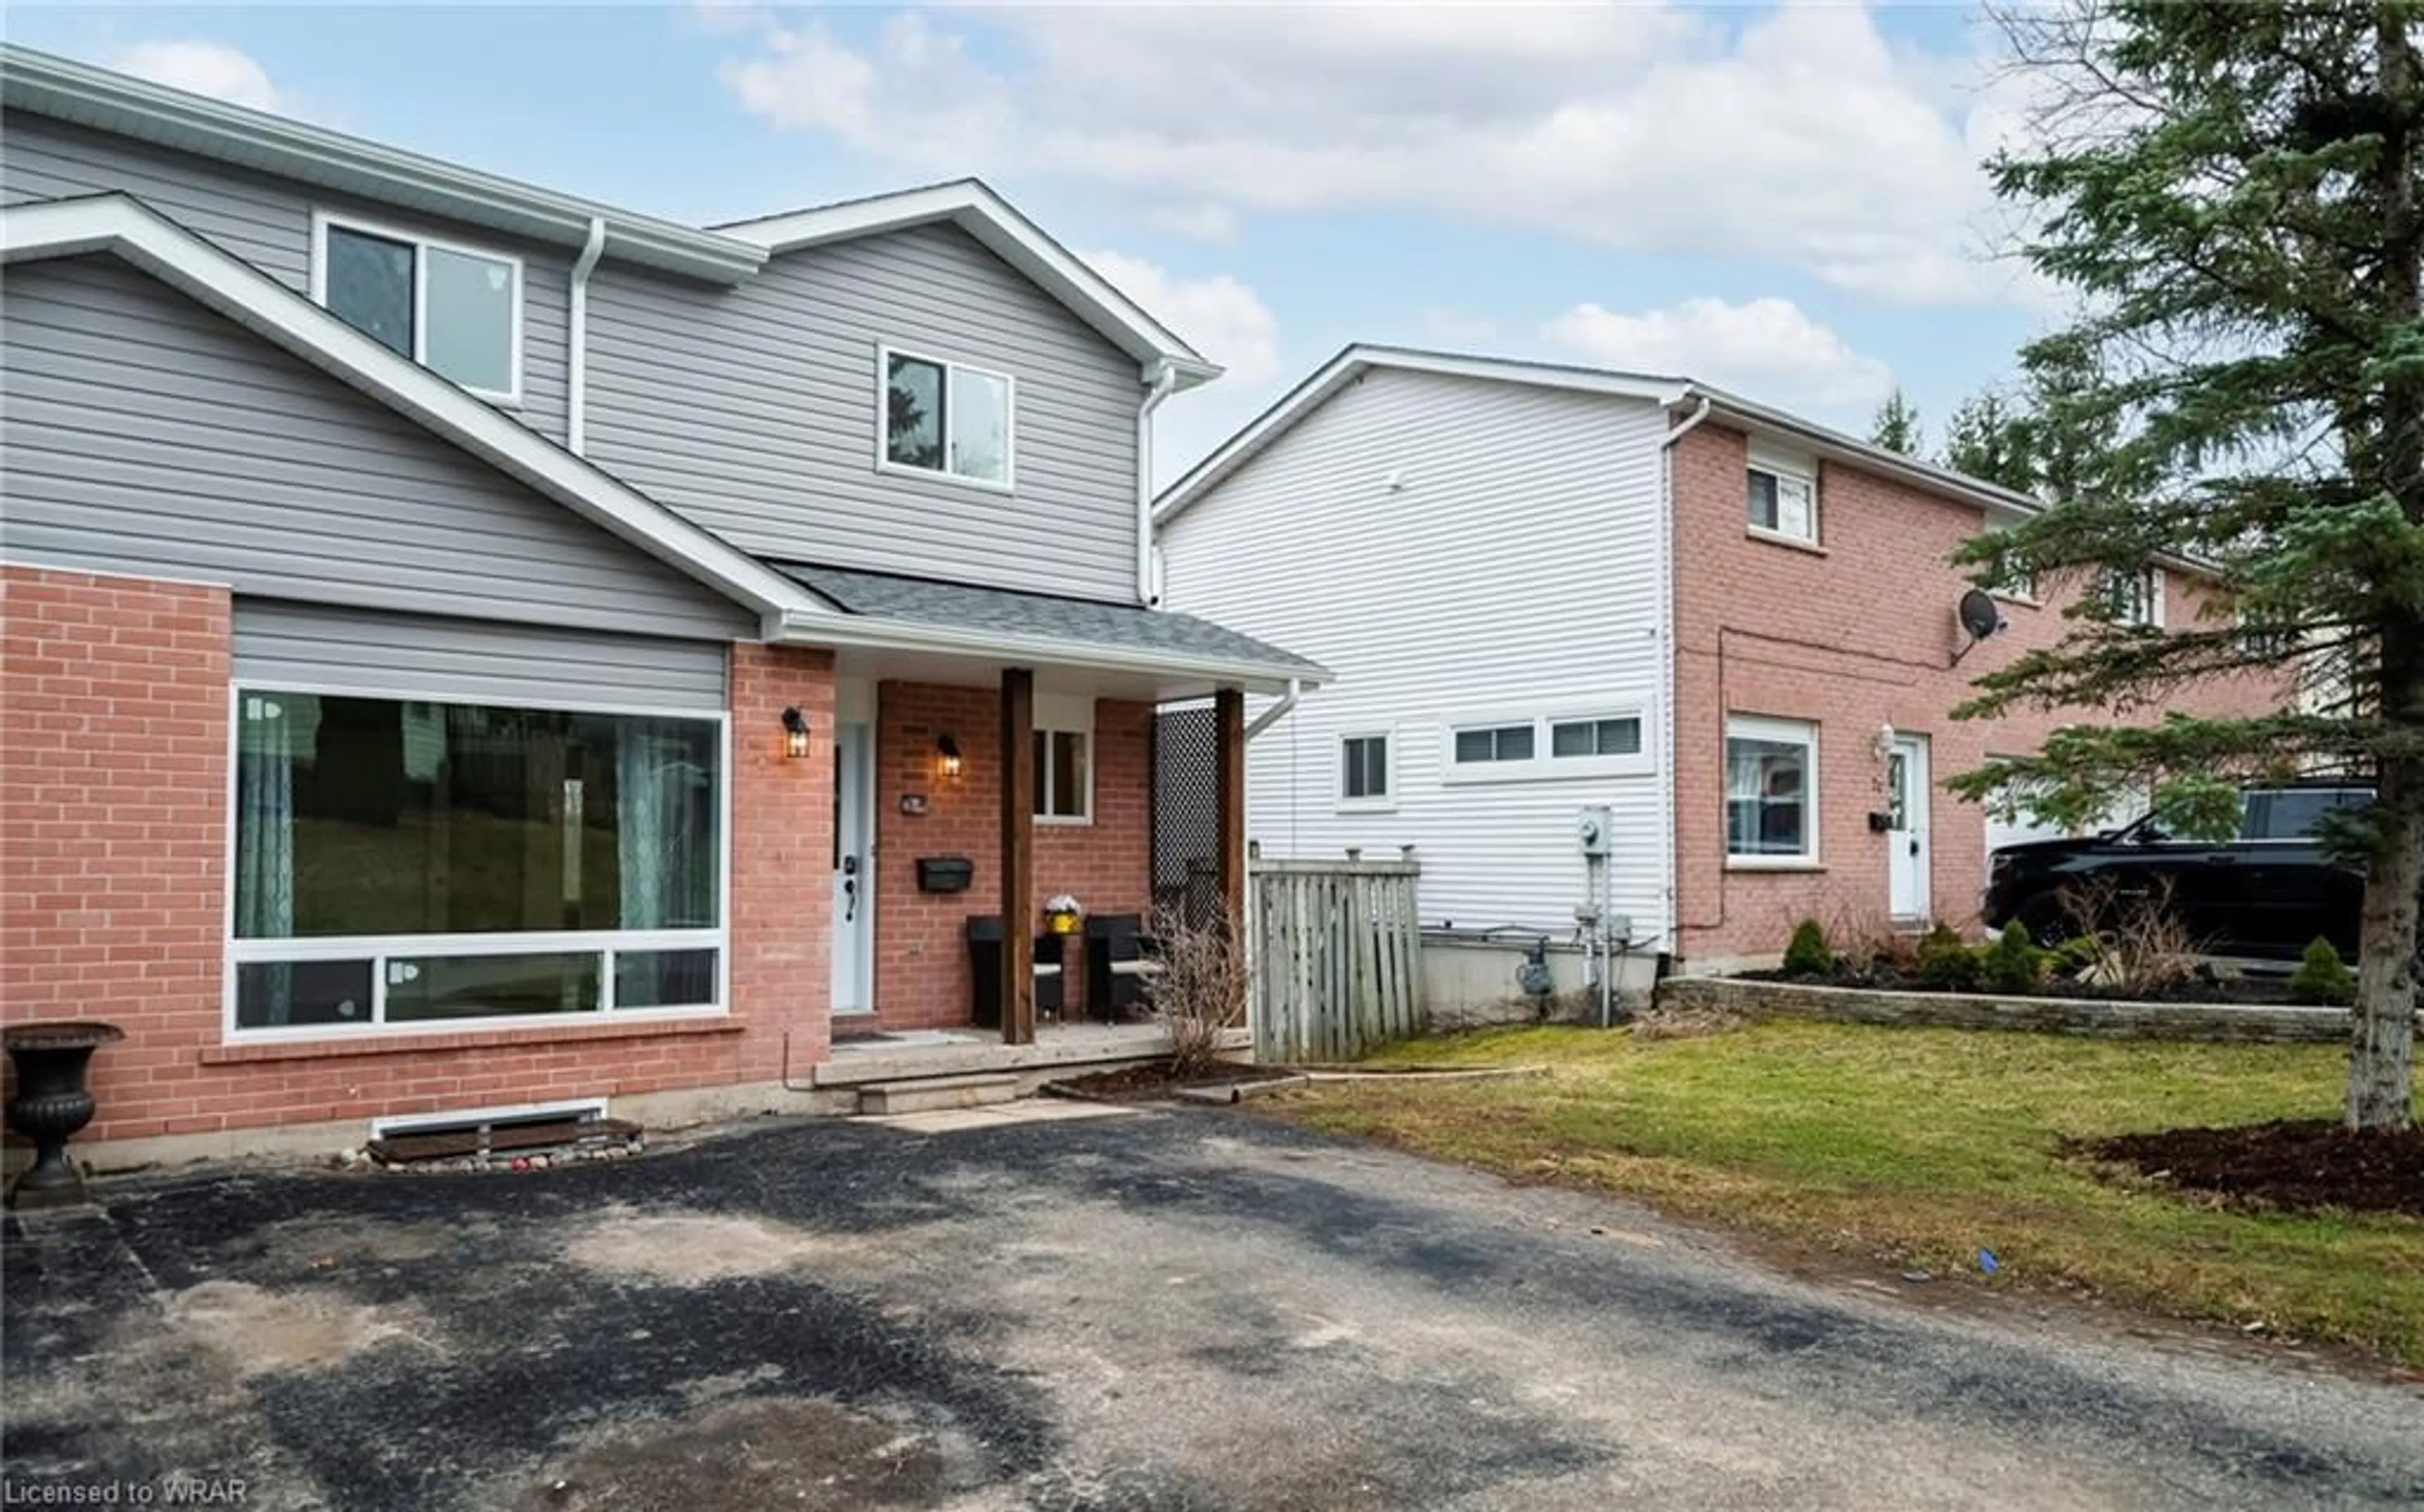 Home with brick exterior material for 19 Orange St, Orangeville Ontario L9W 3A6